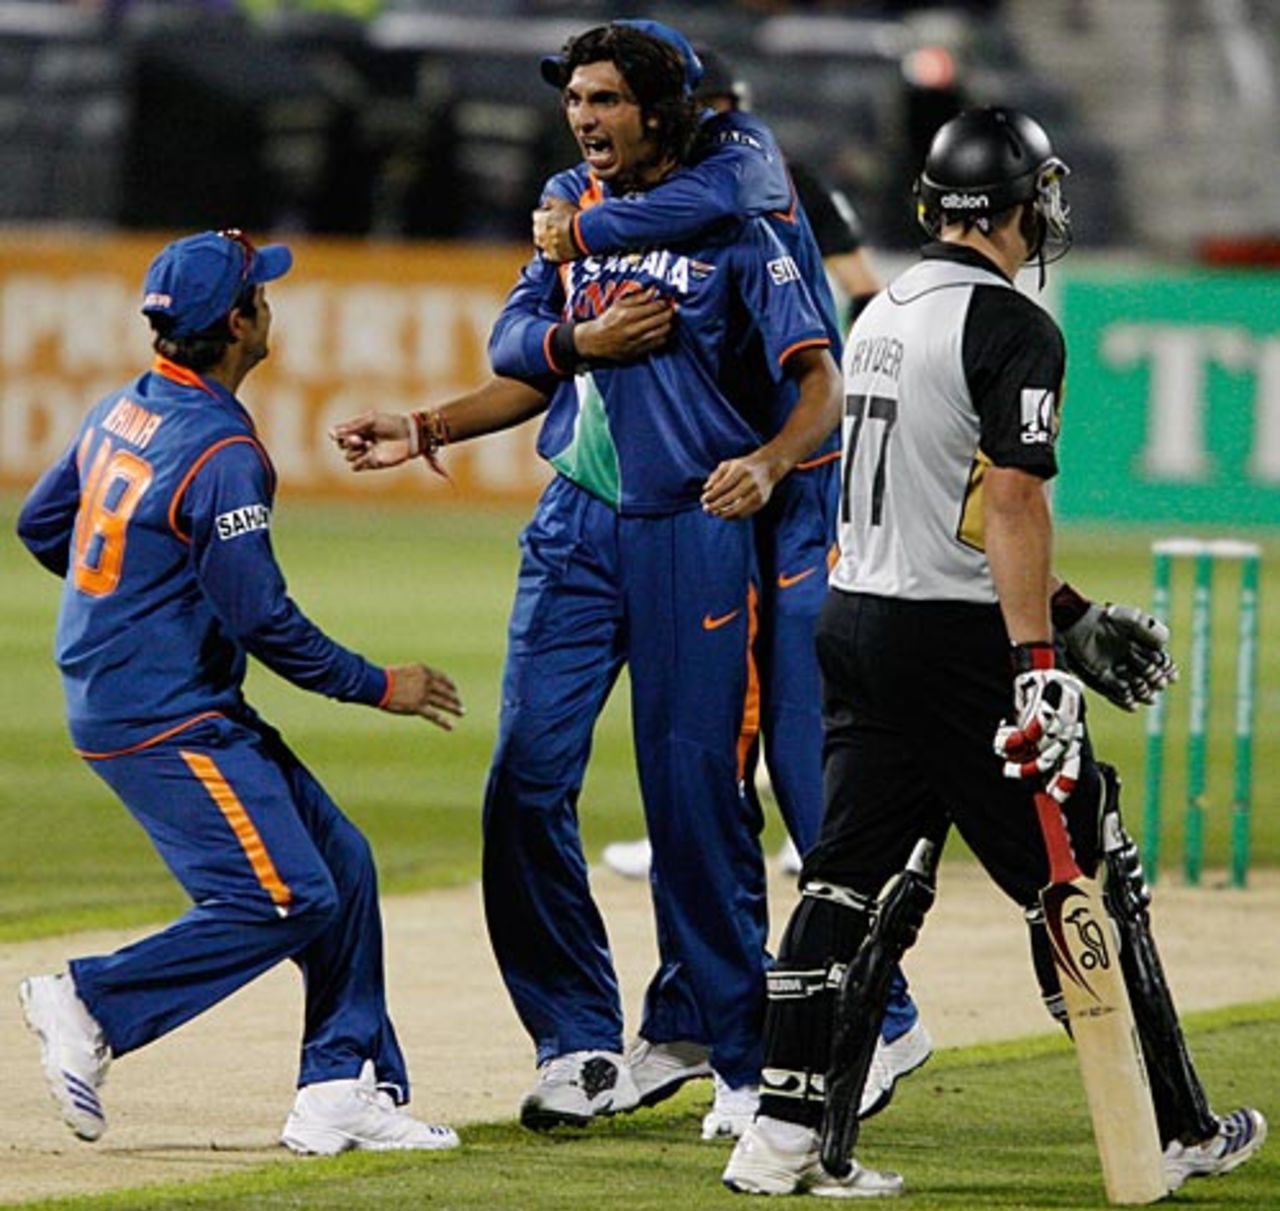 Ishant Sharma dismissed Jesse Ryder with his first ball, New Zealand v India, 1st Twenty20 international, Christchurch, February 25, 2009